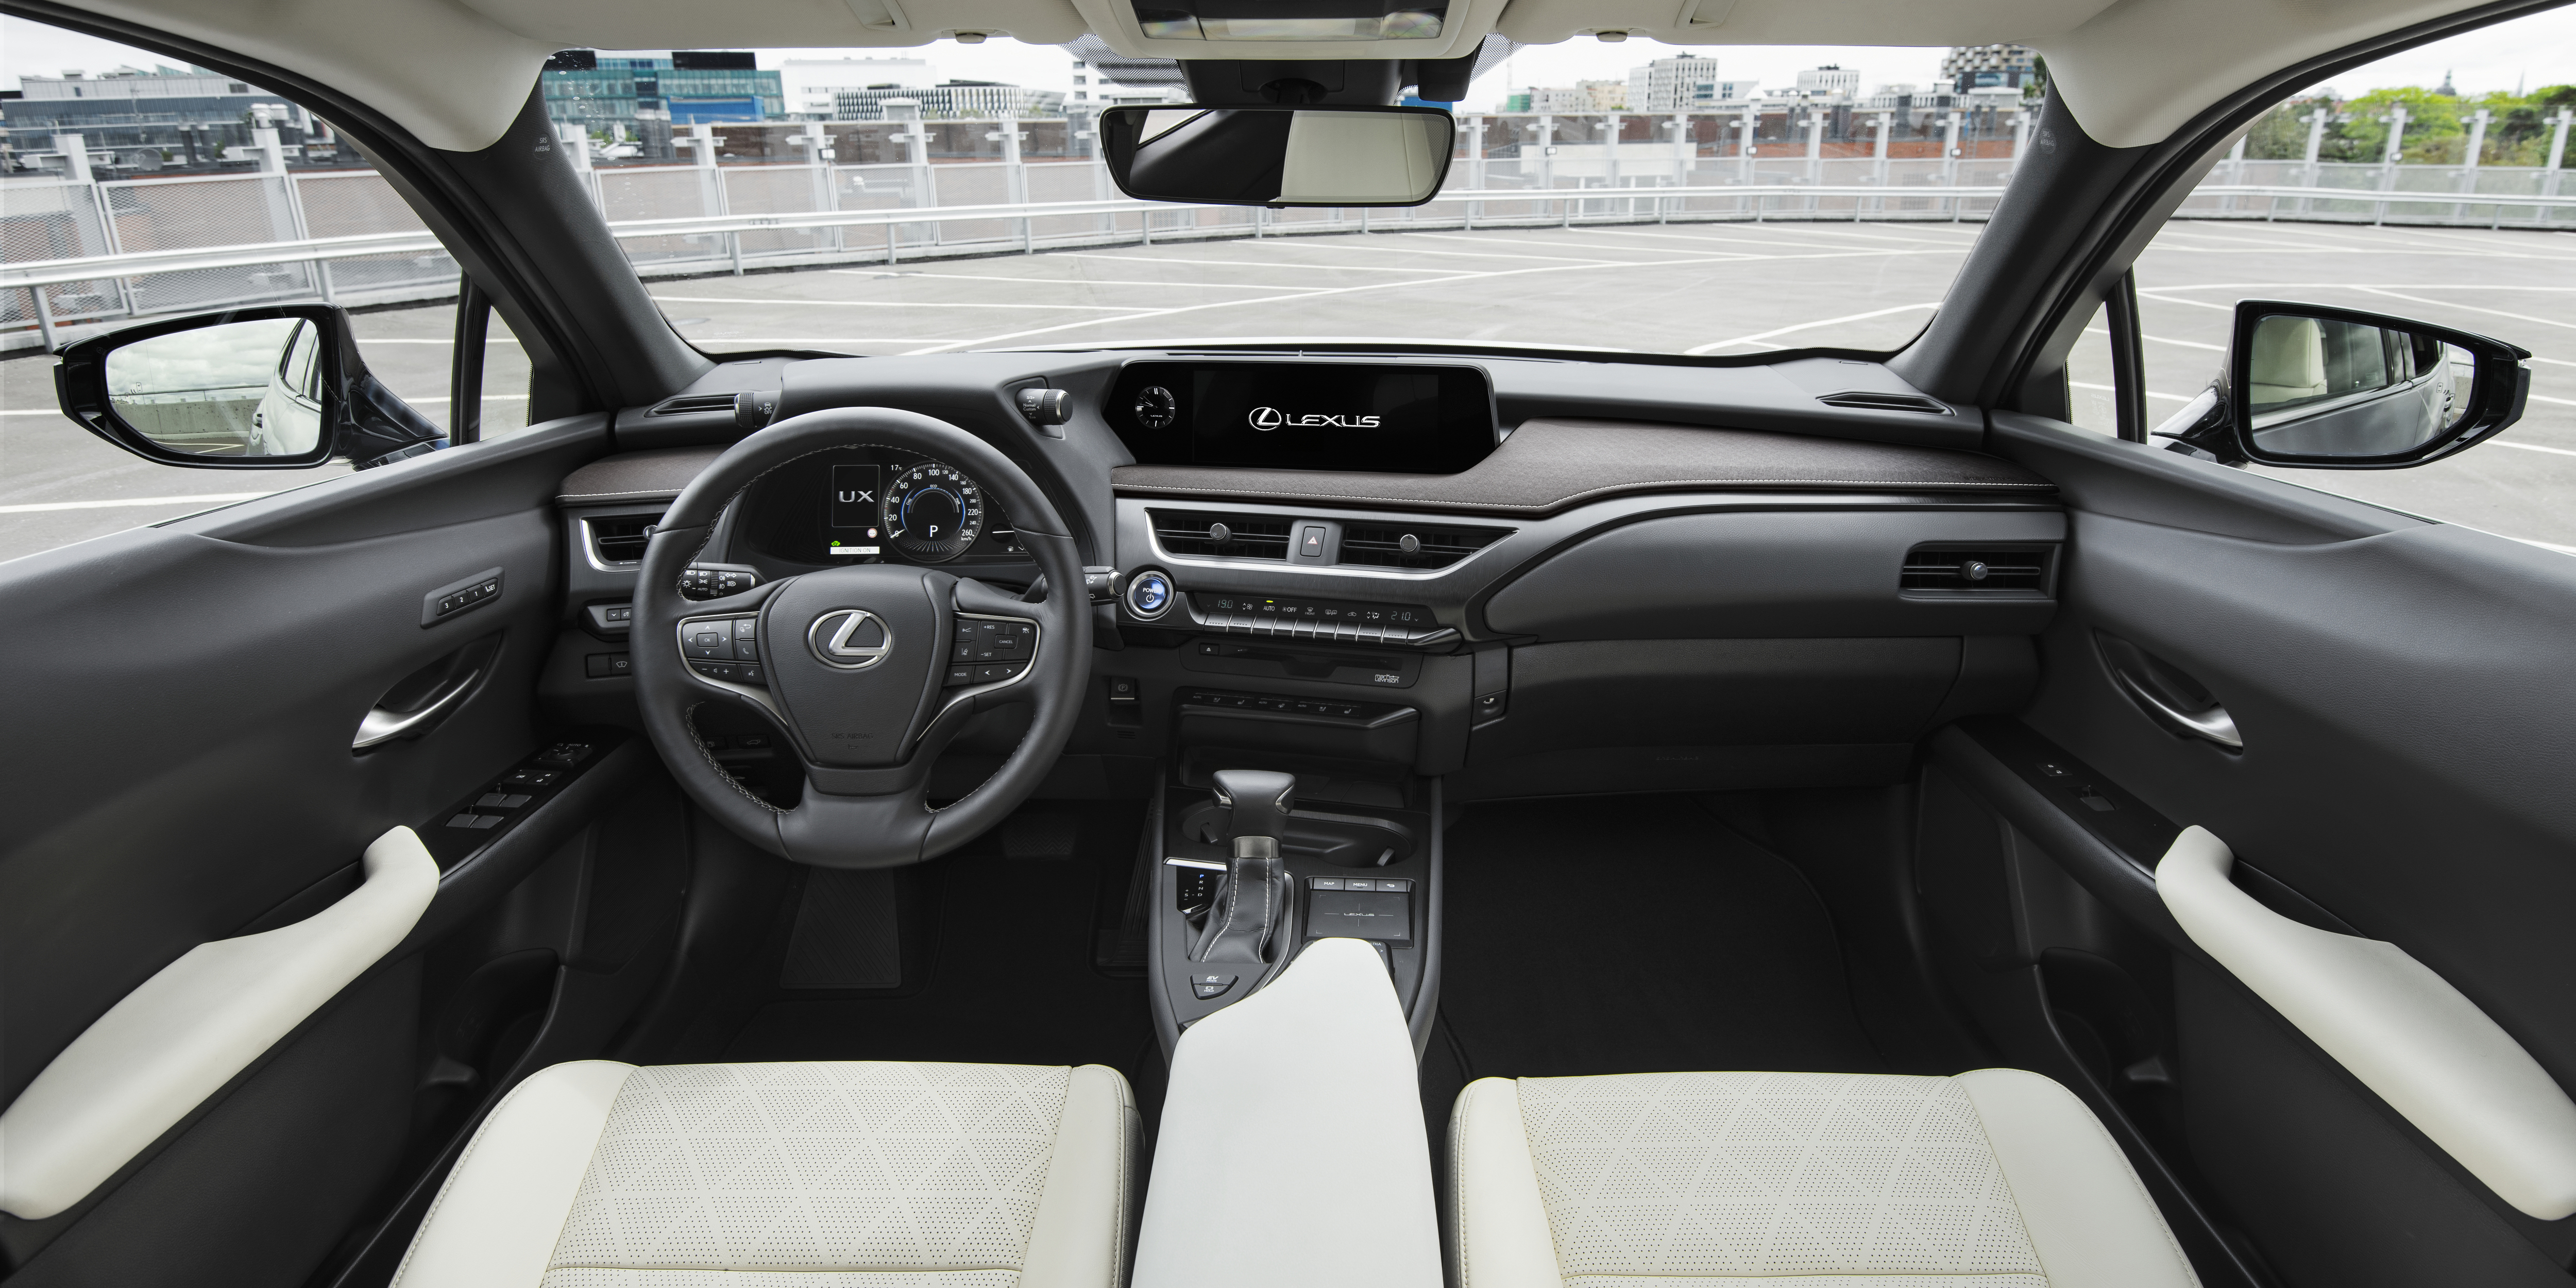 Lexus UX 200 exterior specifications